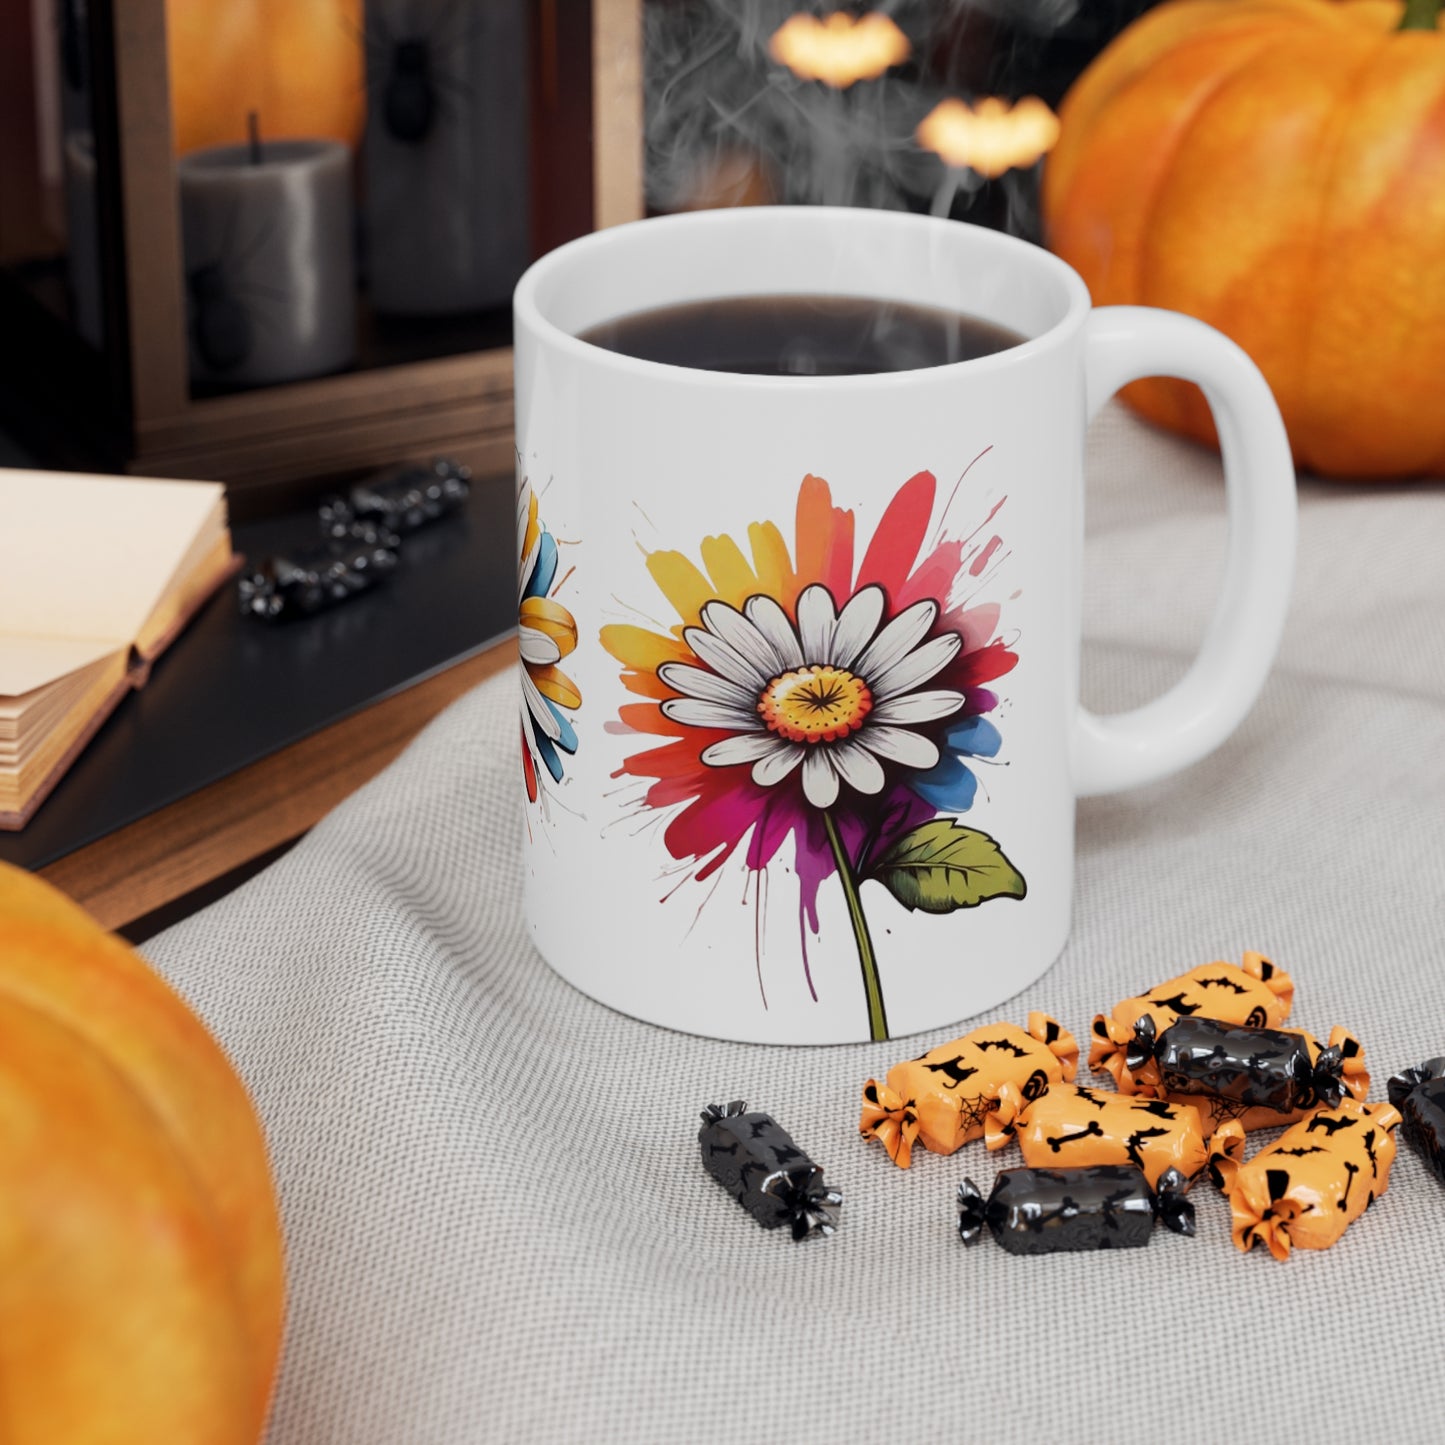 Messy Colourful Daisy Artwork Mug - Ceramic Coffee Mug 11oz